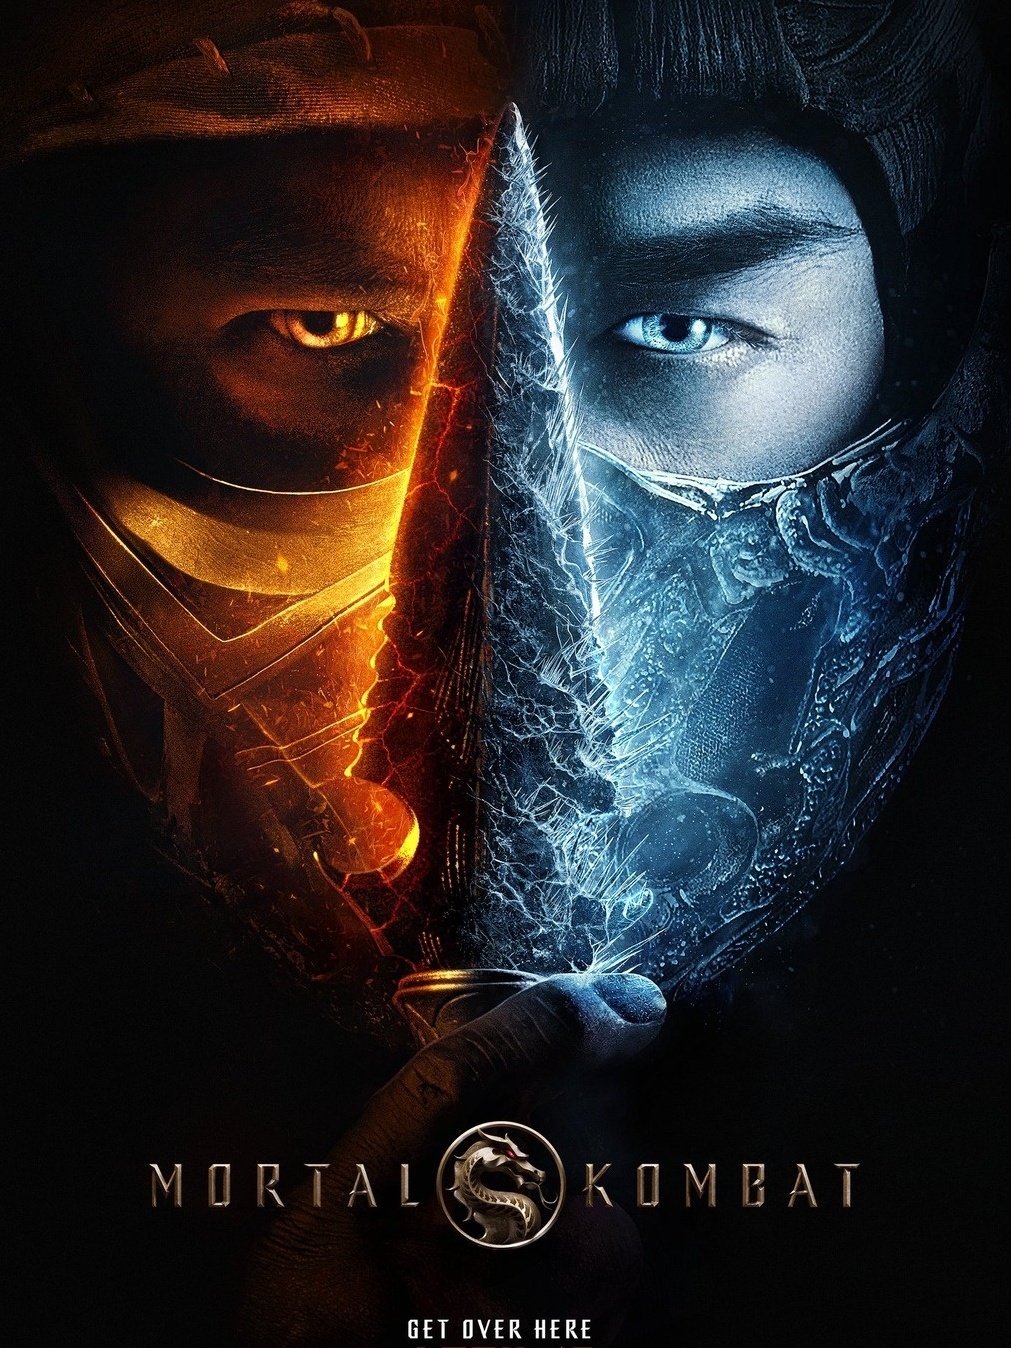 Passei de fase: 5 curiosidades da franquia Mortal Kombat